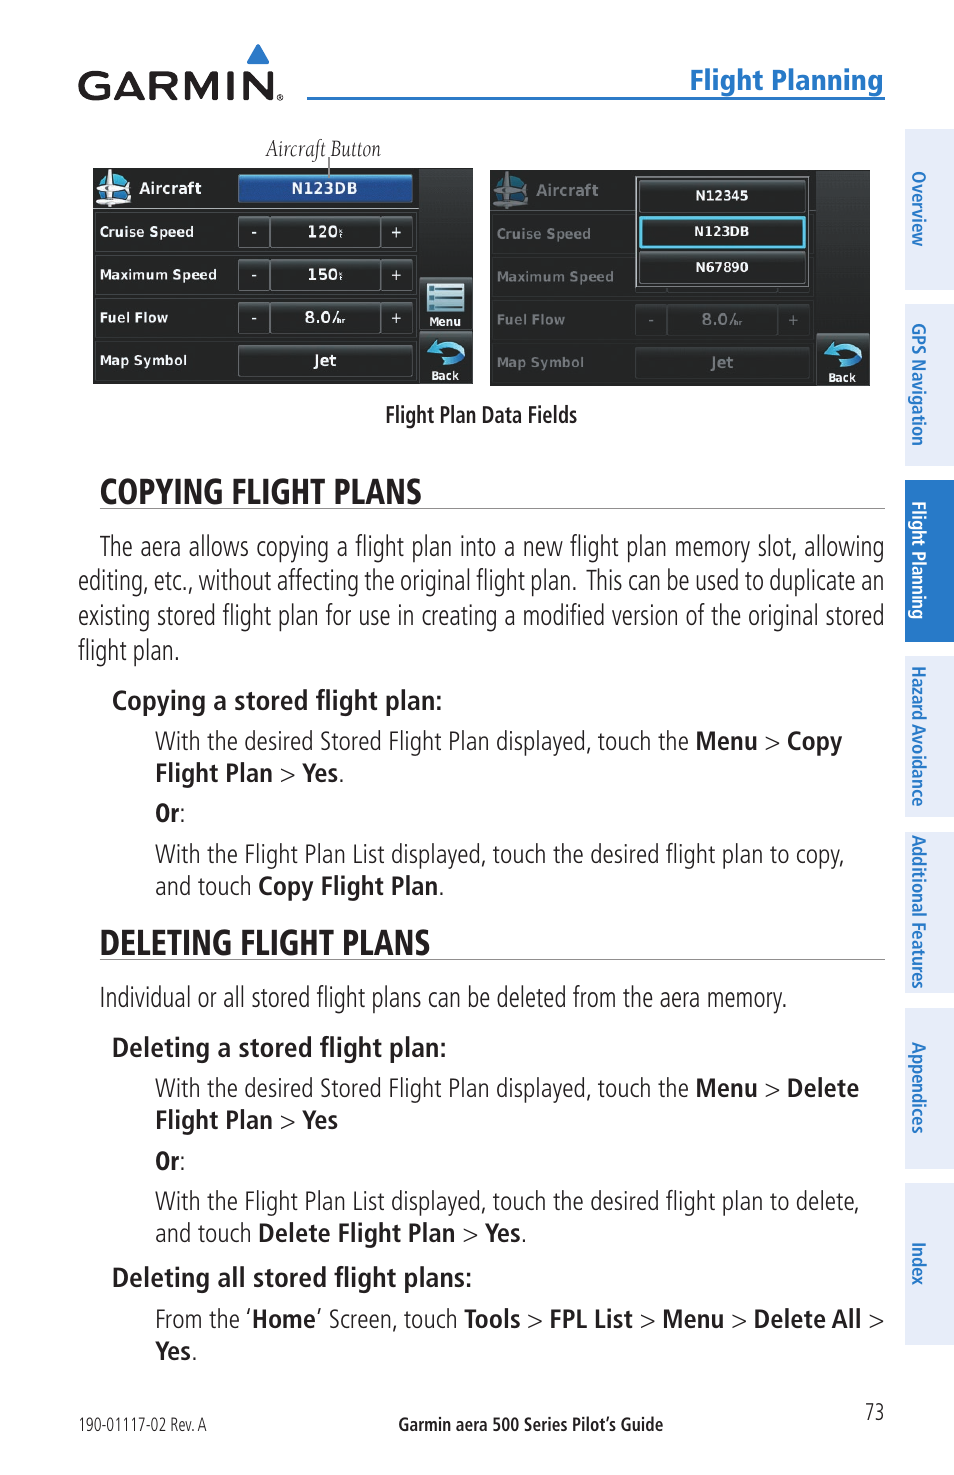 Copying flight plans, Deleting flight plans, Copying flight plans deleting flight plans | Flight planning | Garmin aera 500 User Manual | Page 85 / 202